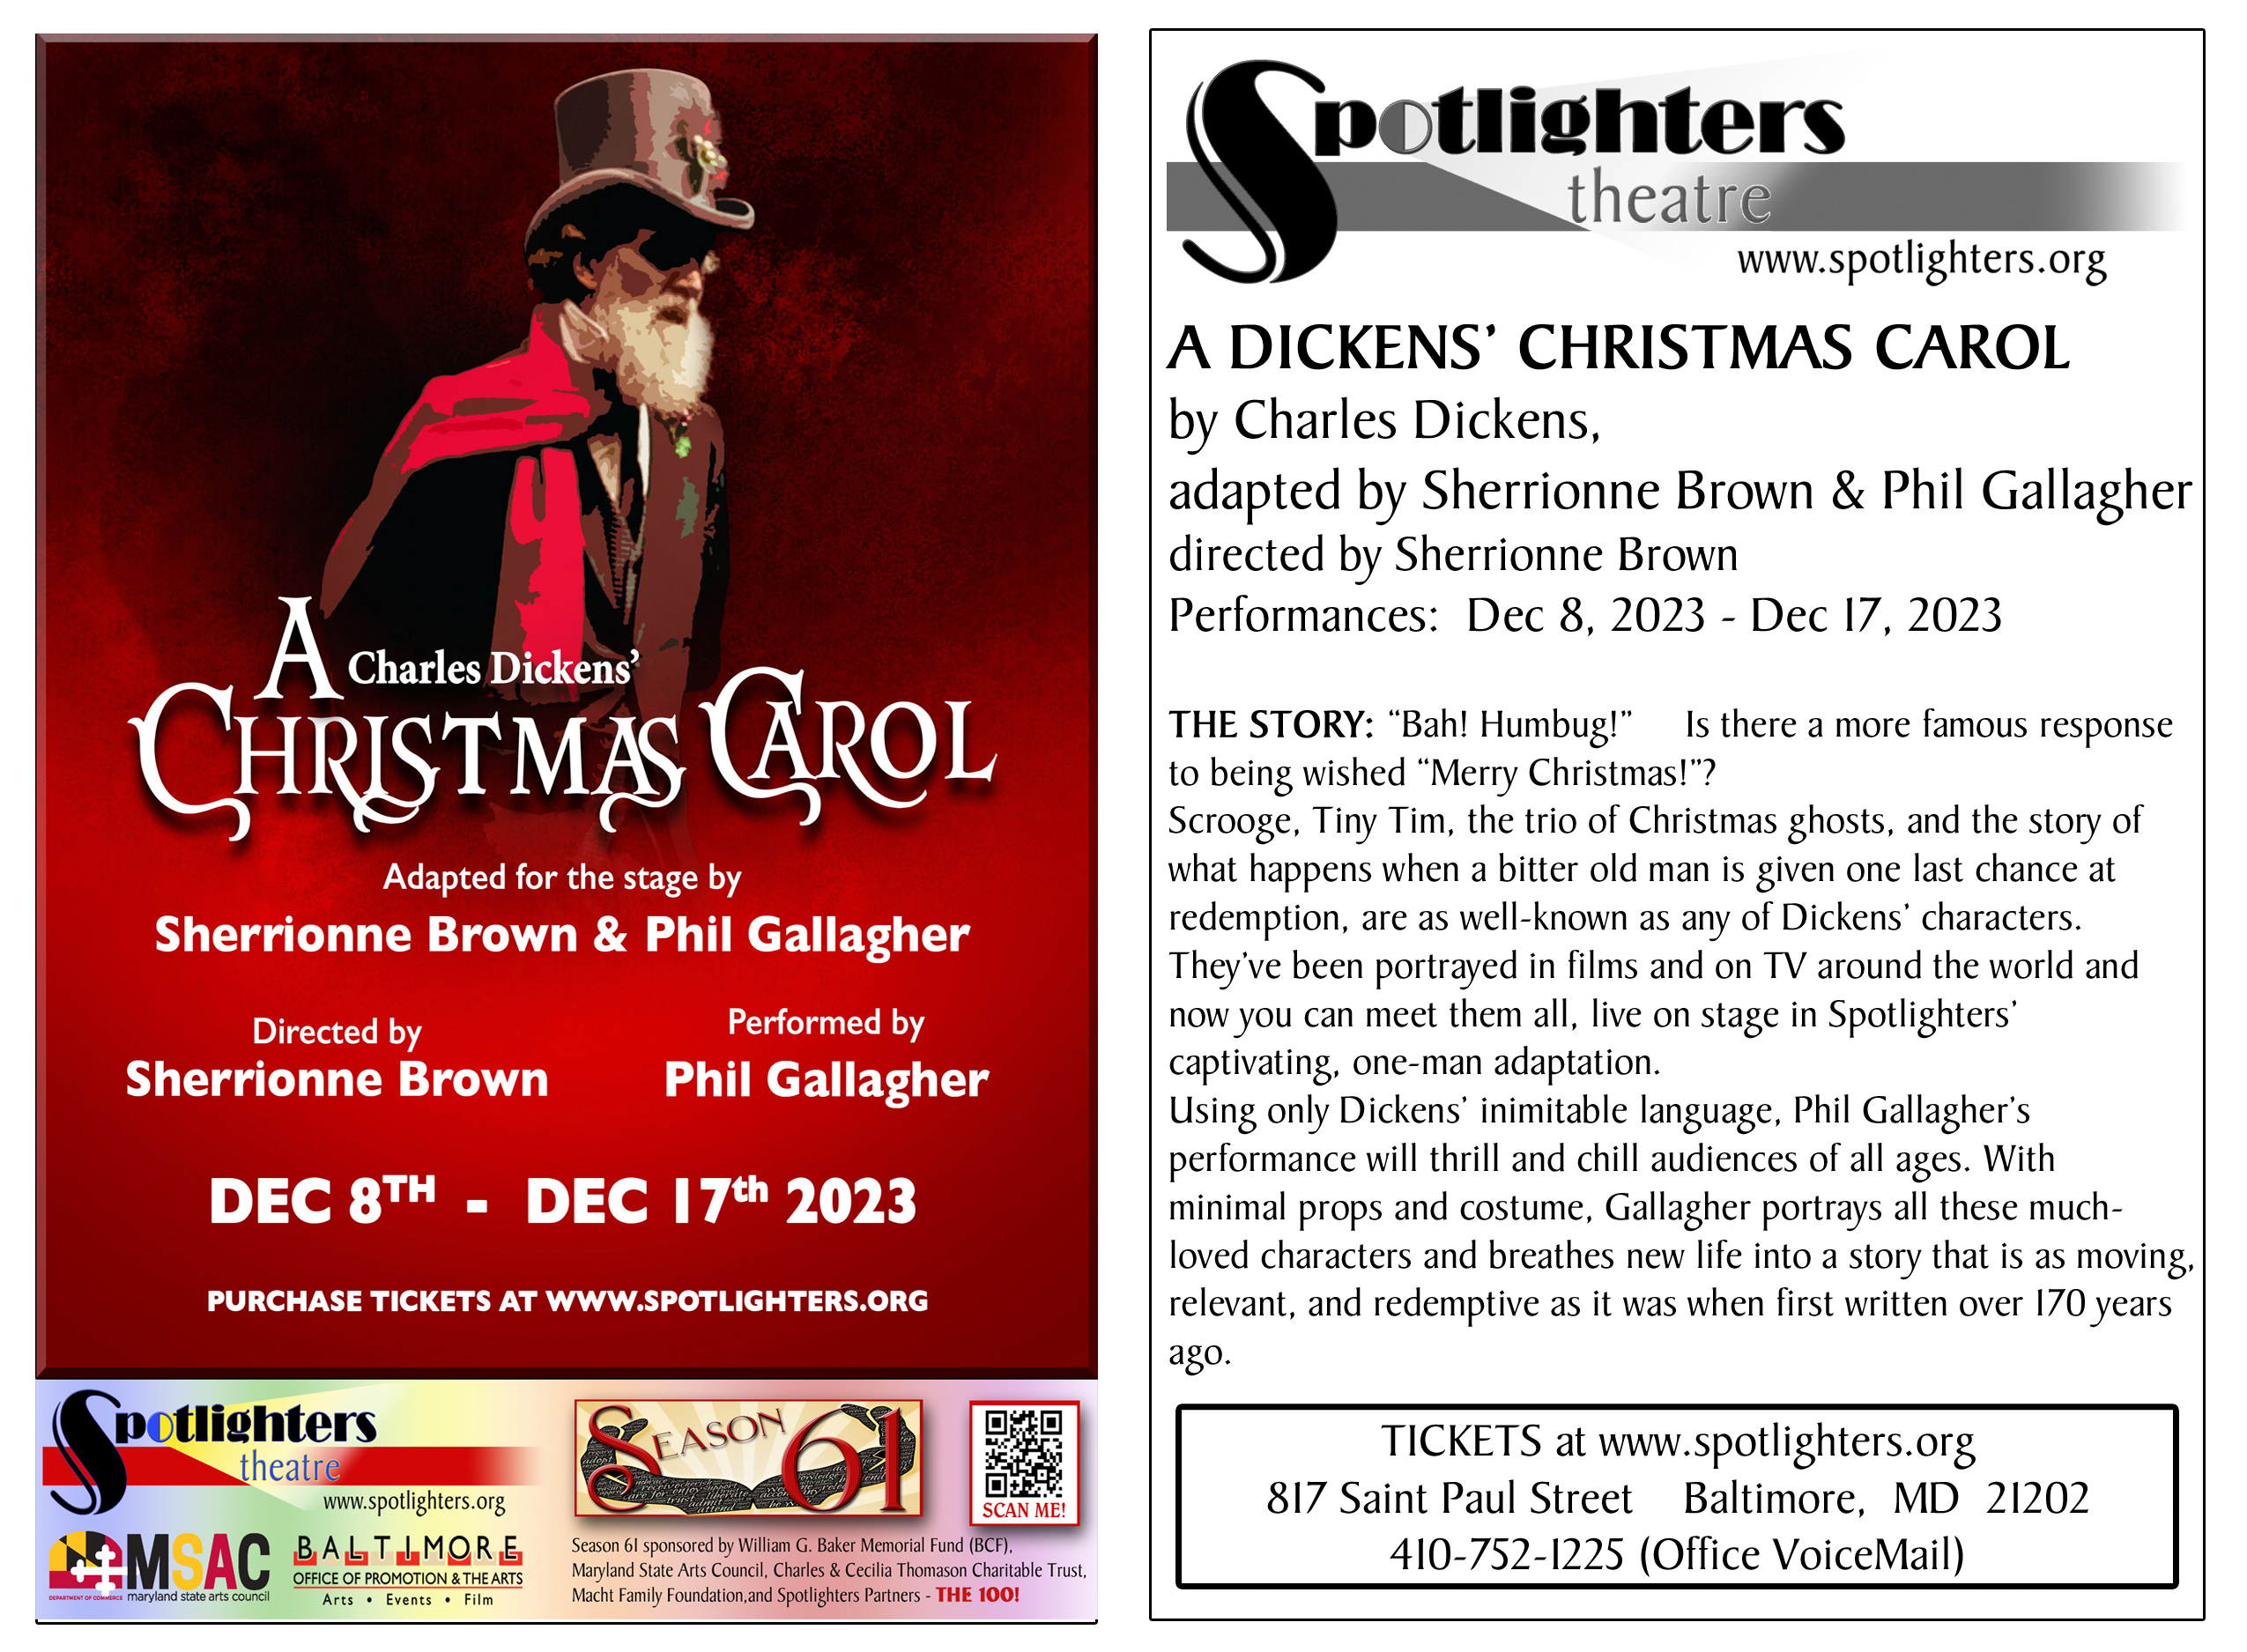 A Dickens'' Christmas Carol Dec 8 - 17, 2023 SEVEN Performances www.spotlighters.org/christmascarol